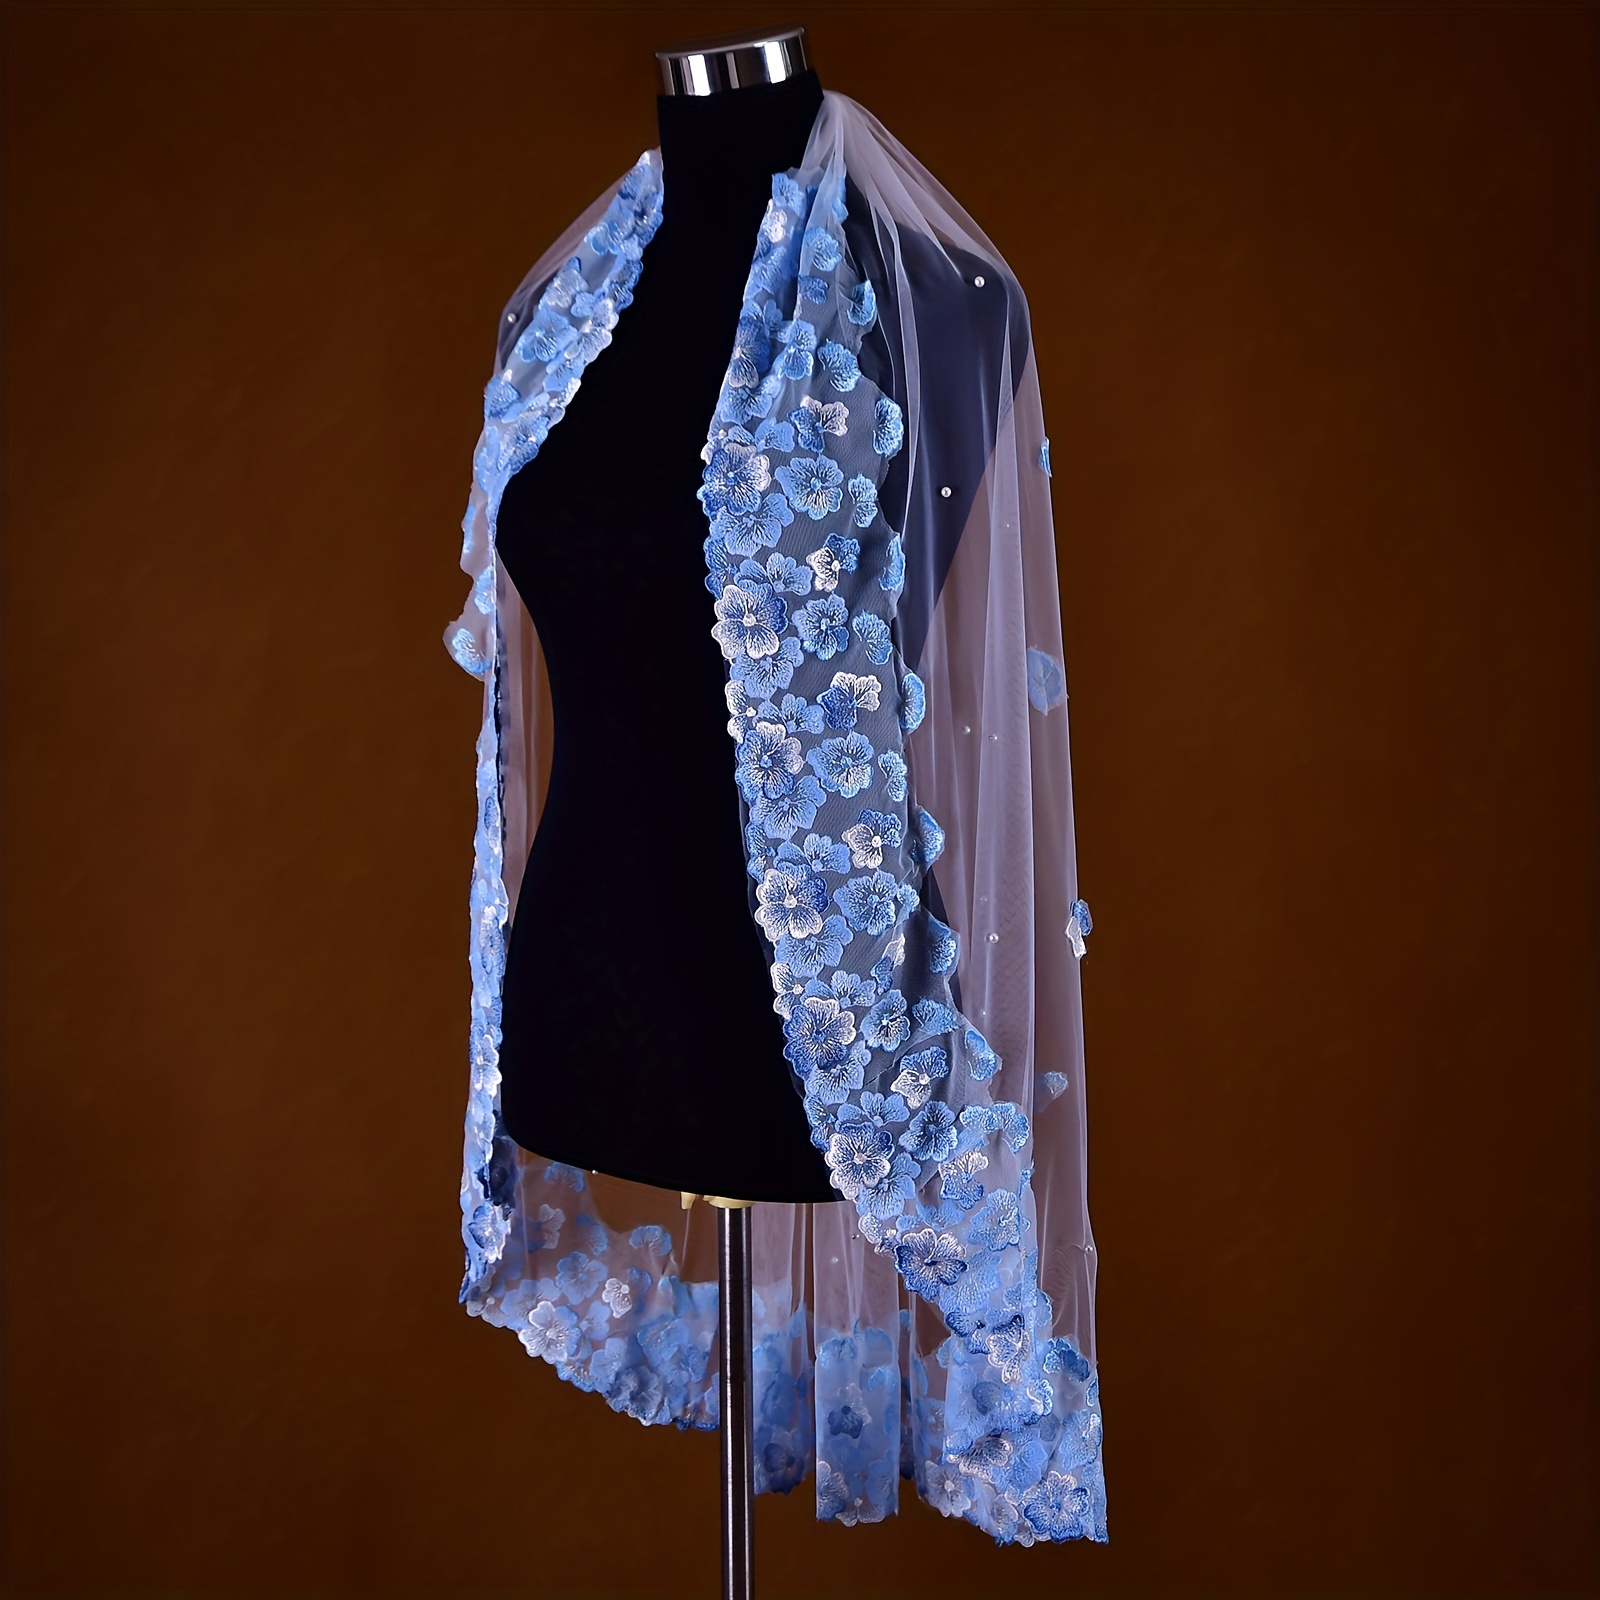 Fantasia in Silk: An Embroidery Design Exploration –